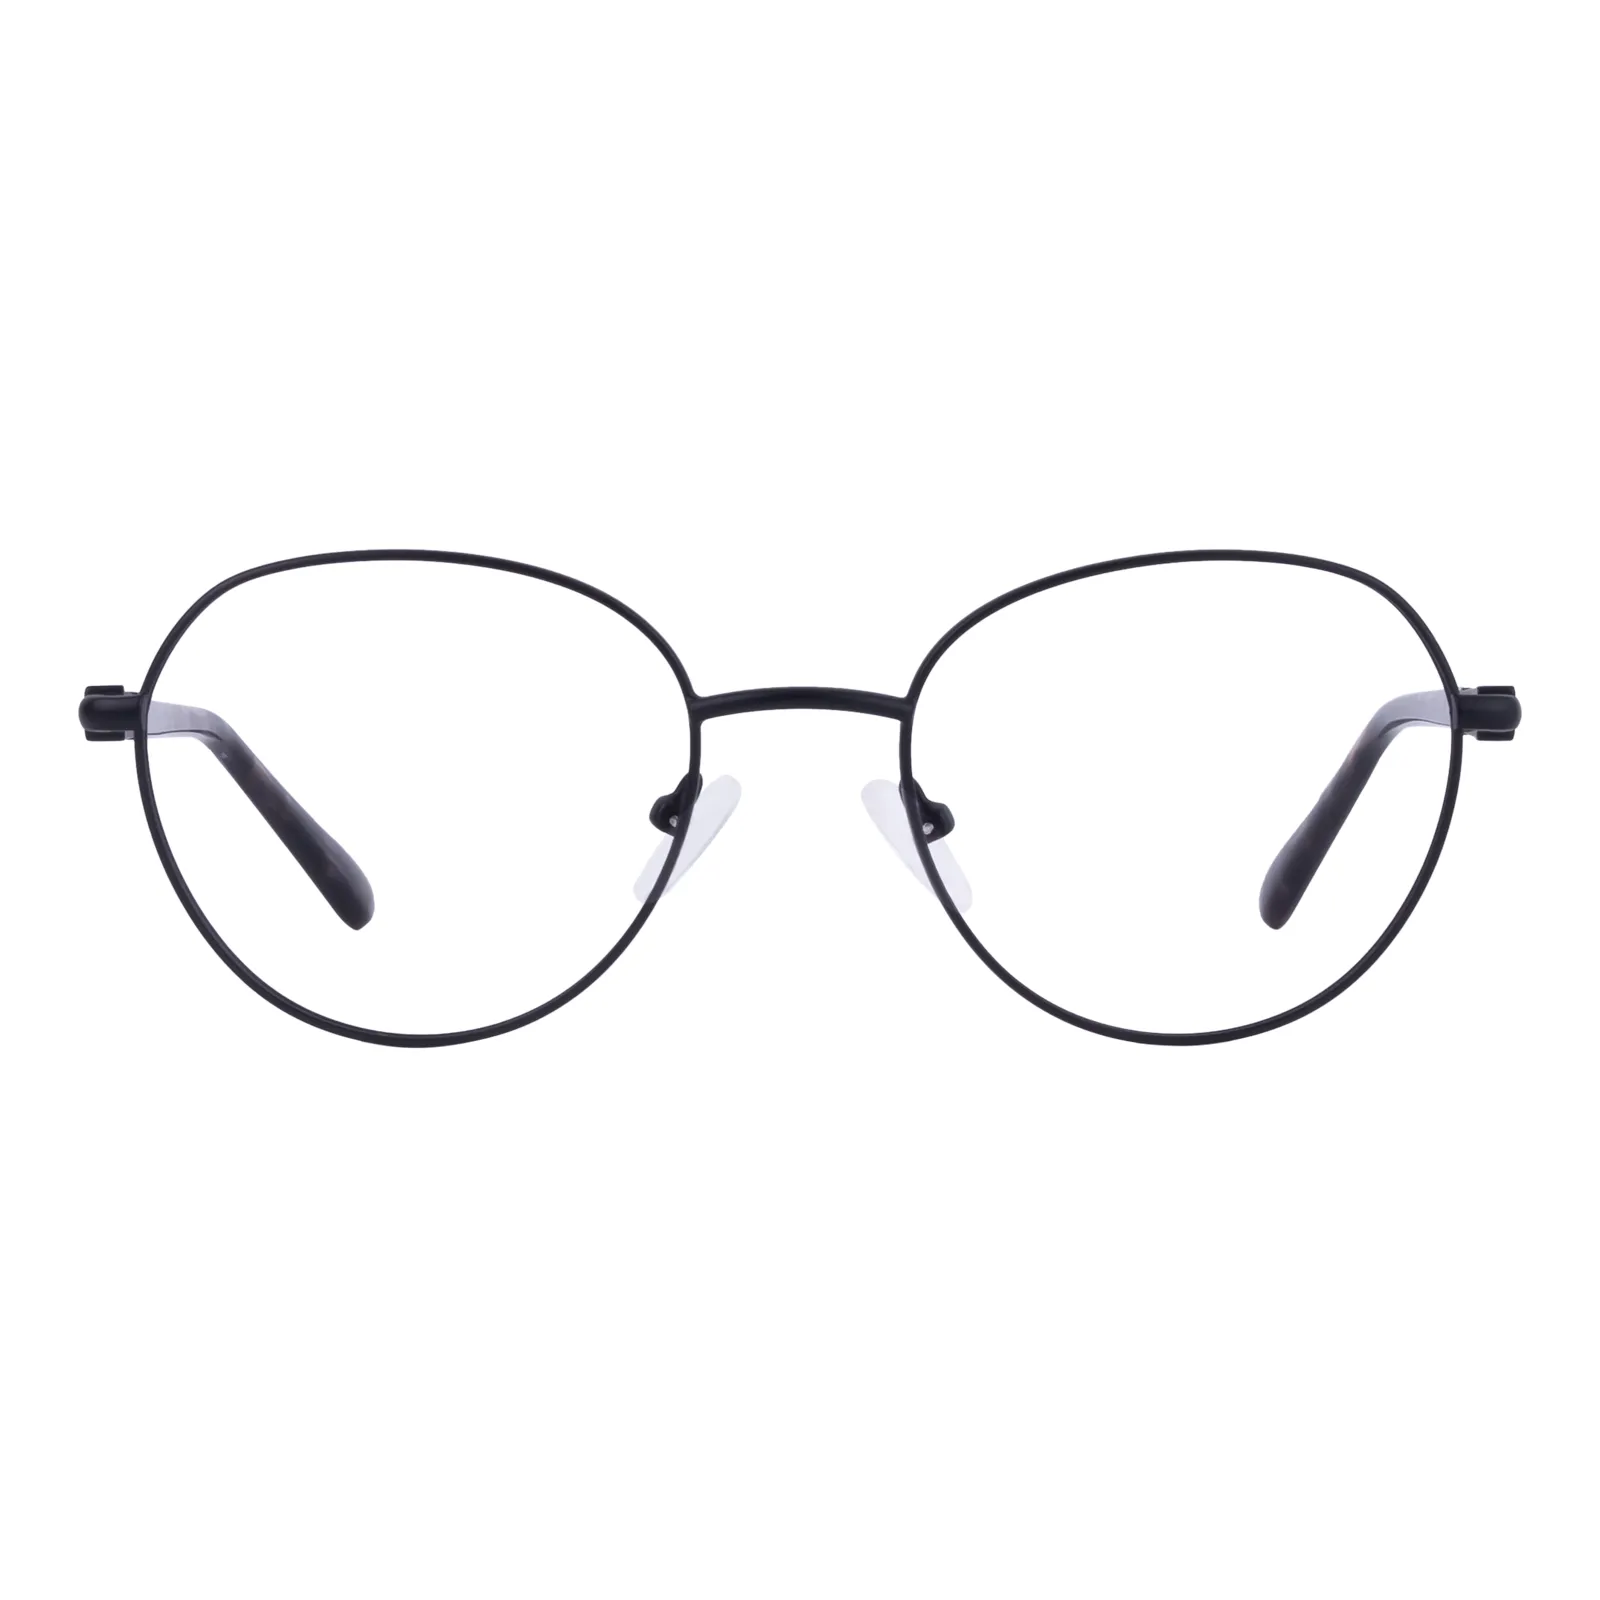 Liam - Round Black Glasses for Women